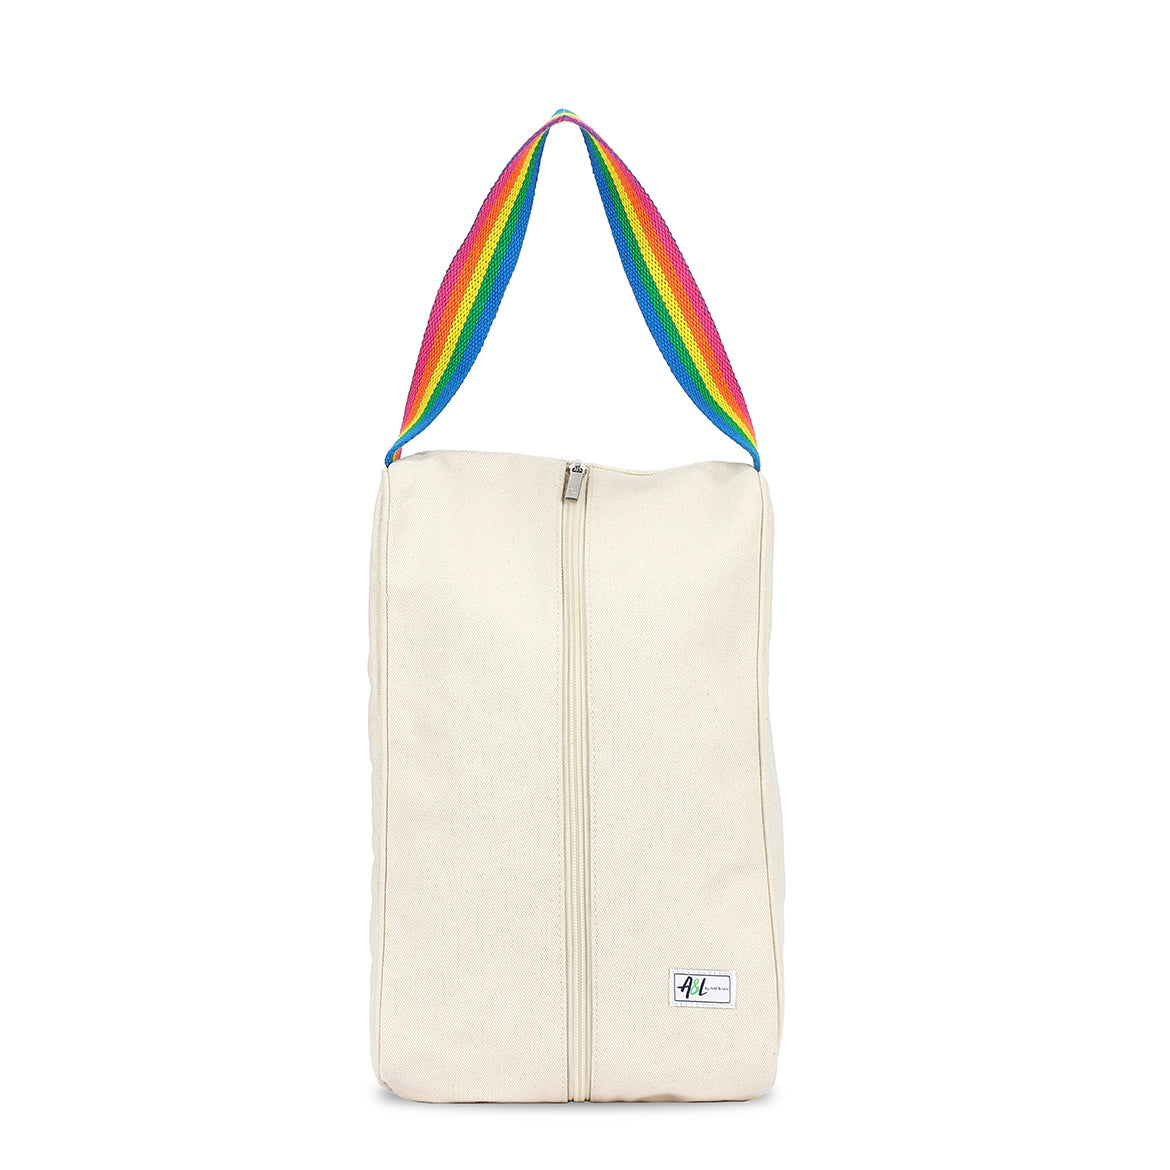 rectangular tan canvas shoe bag with rainbow striped handles.